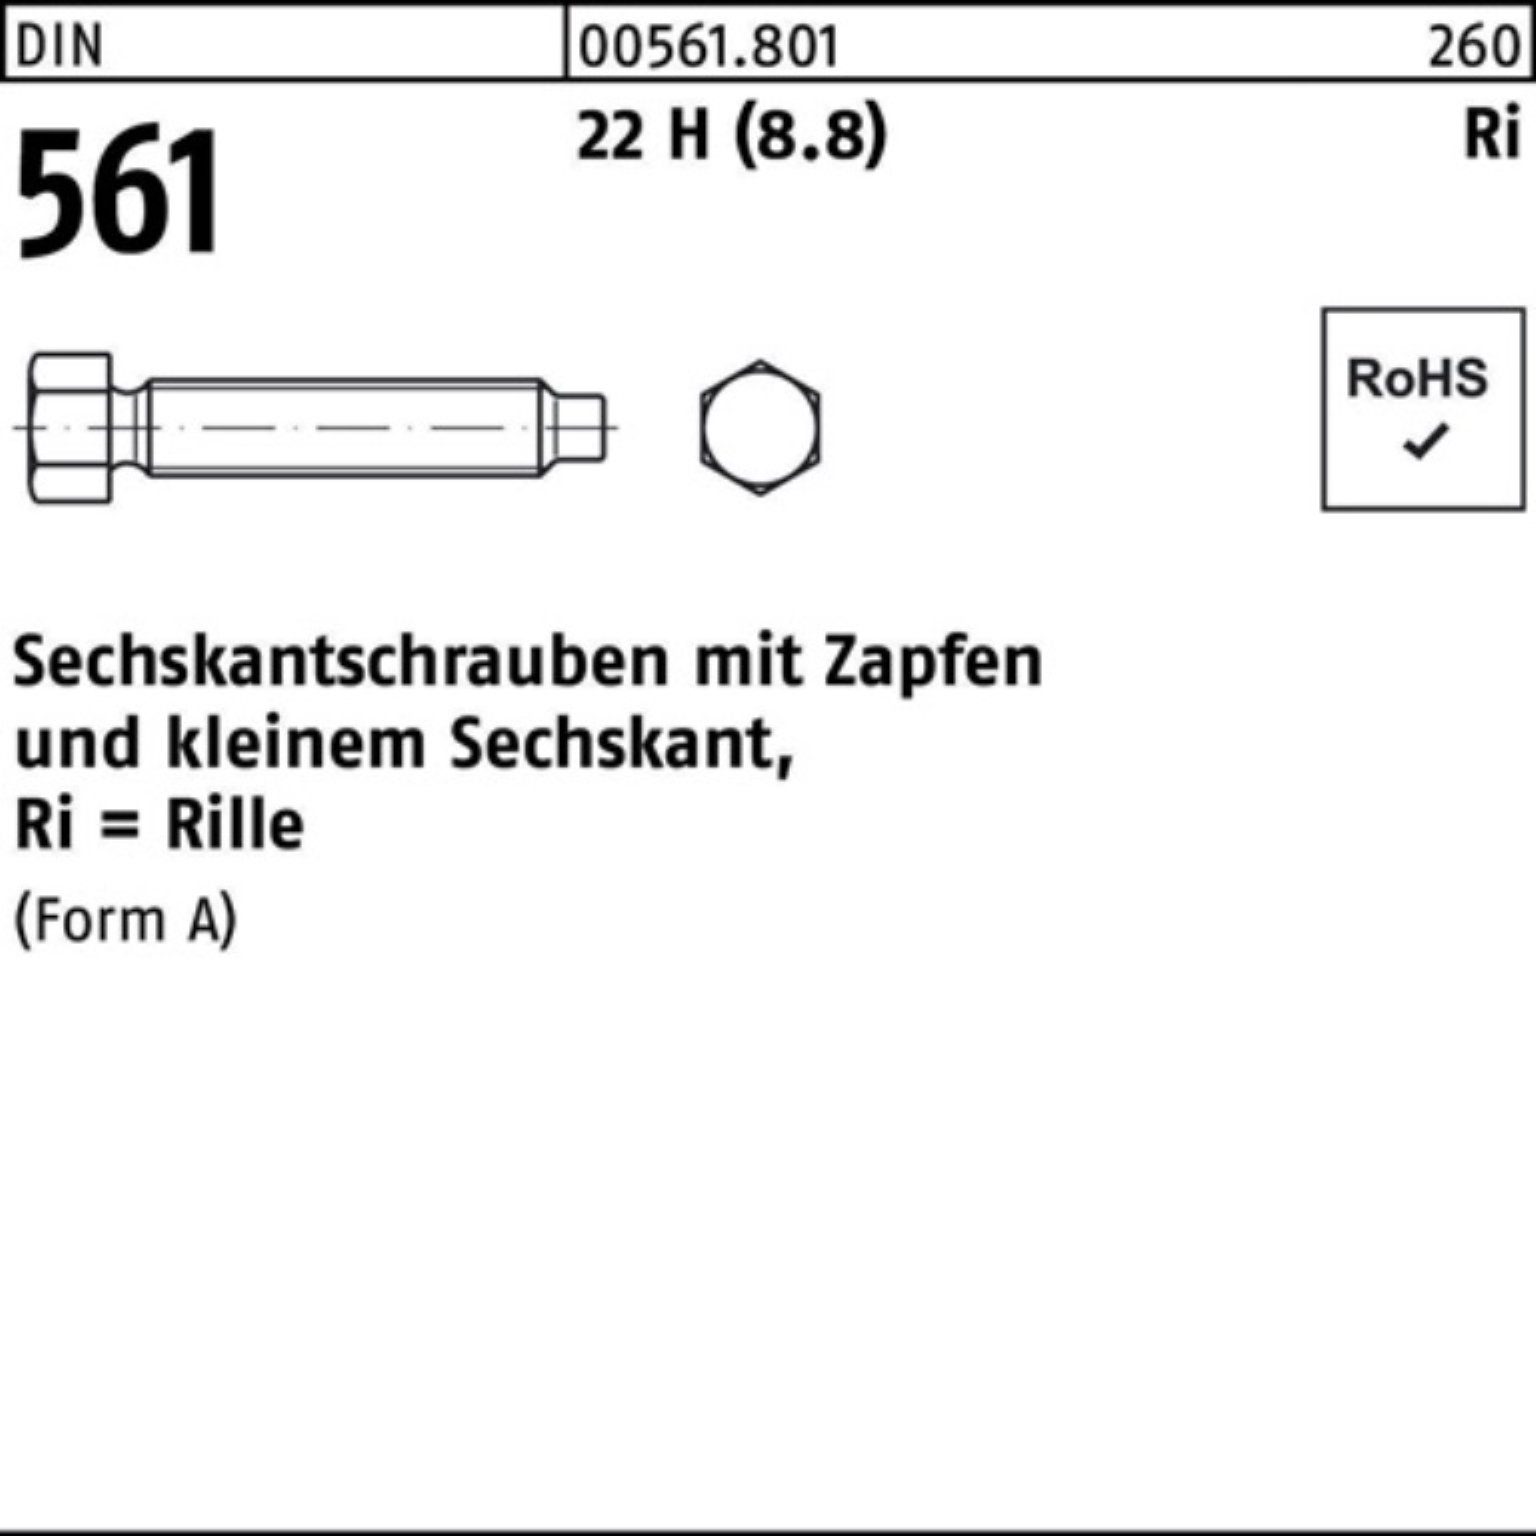 Reyher Sechskantschraube 100er 22 1 30x 90 (8.8) H Sechskantschraube AM St 561 Zapfen DIN Pack